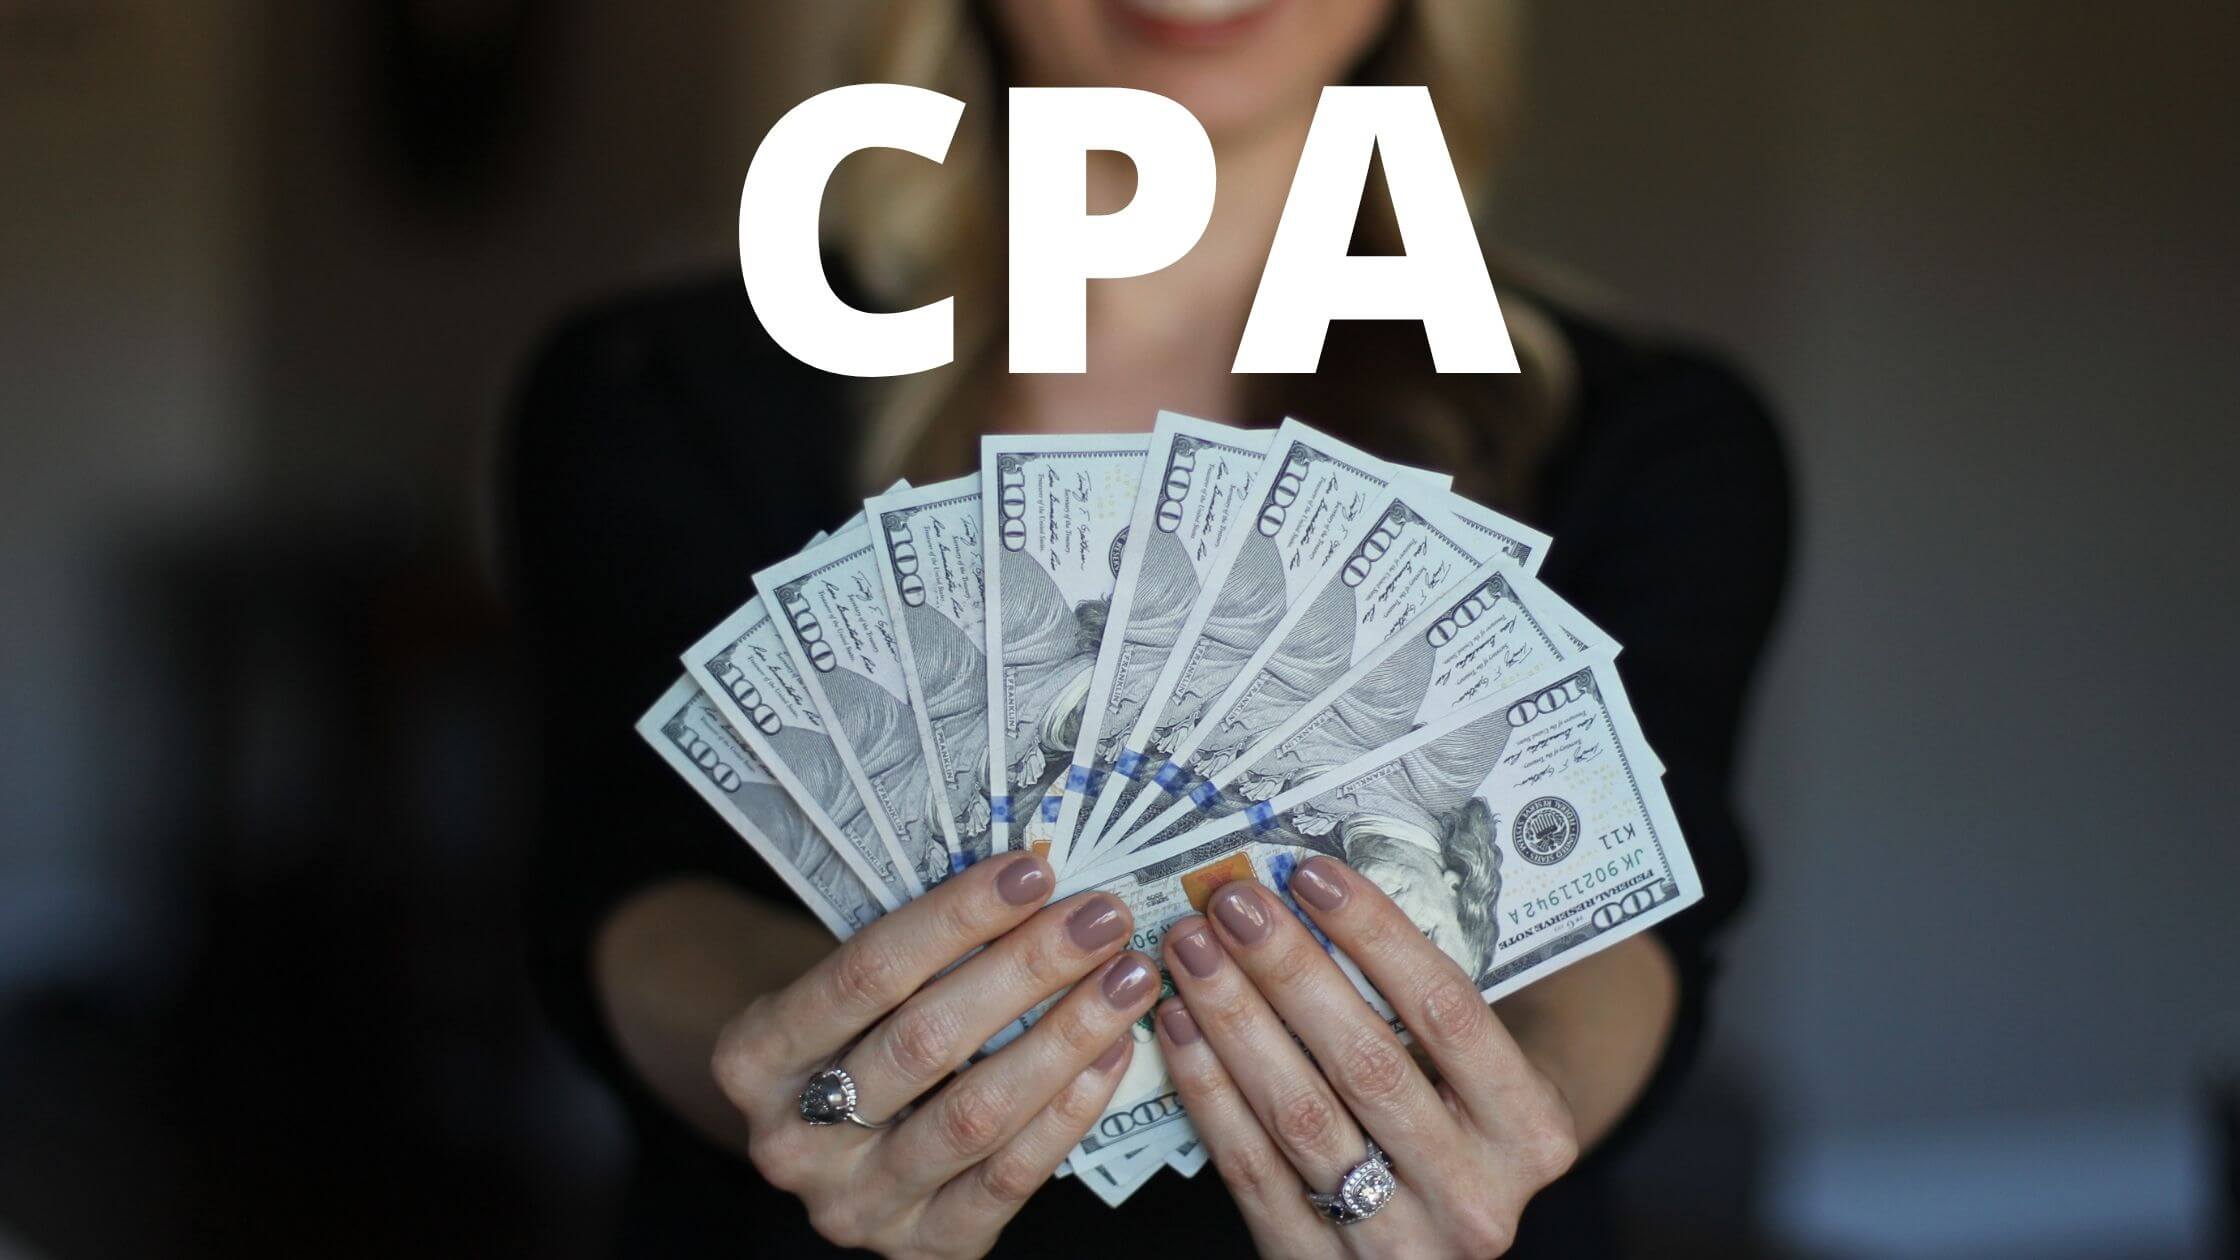 CPA marketing